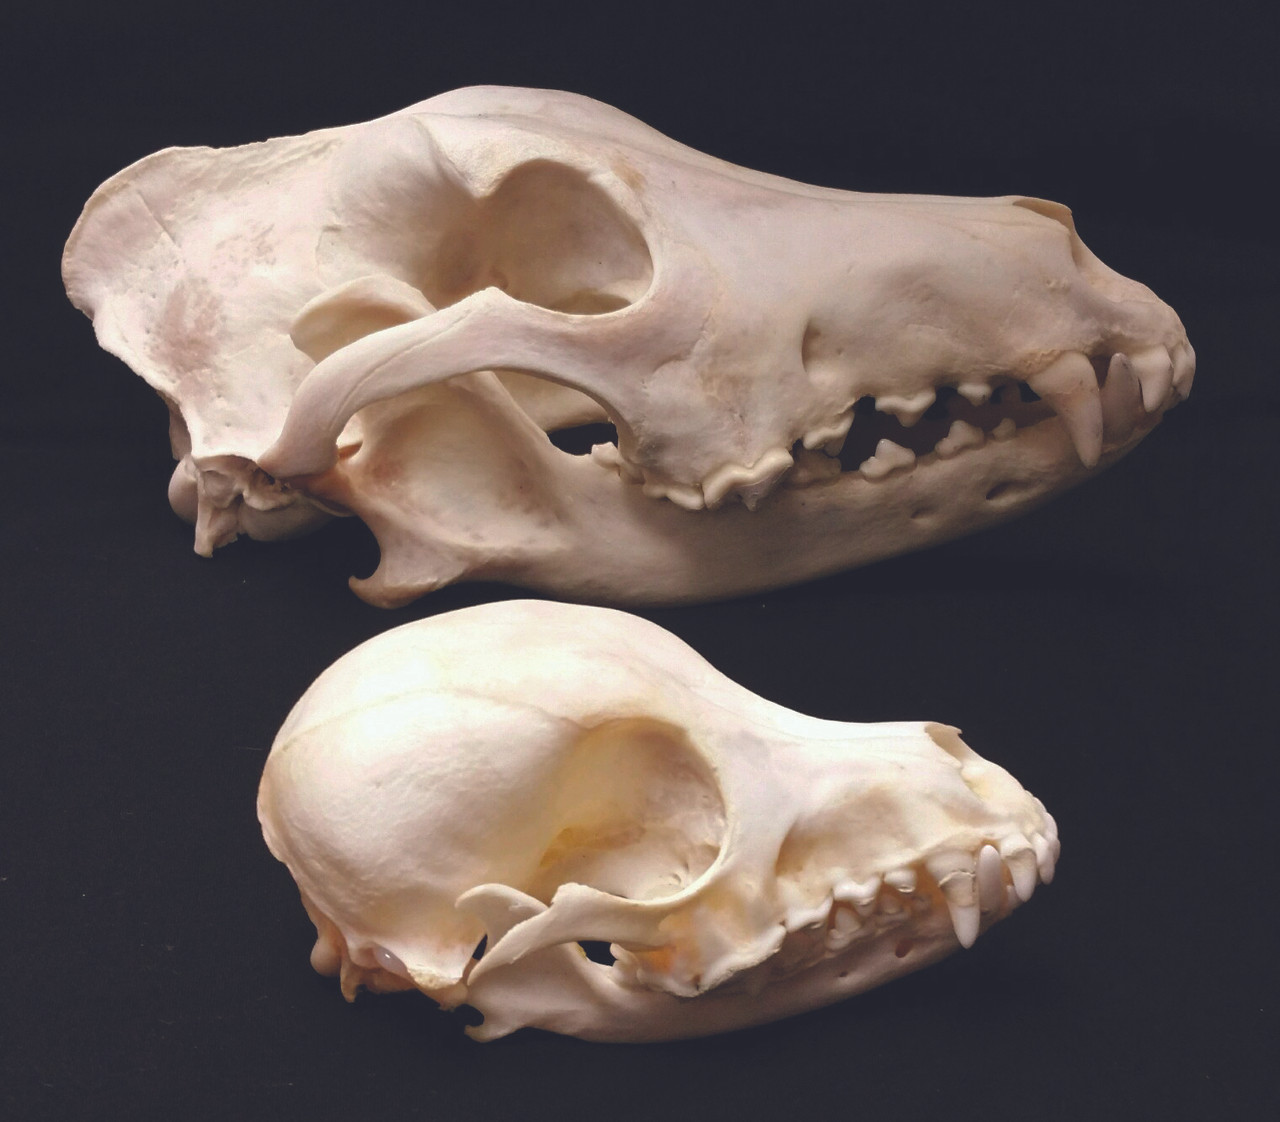 skull dog